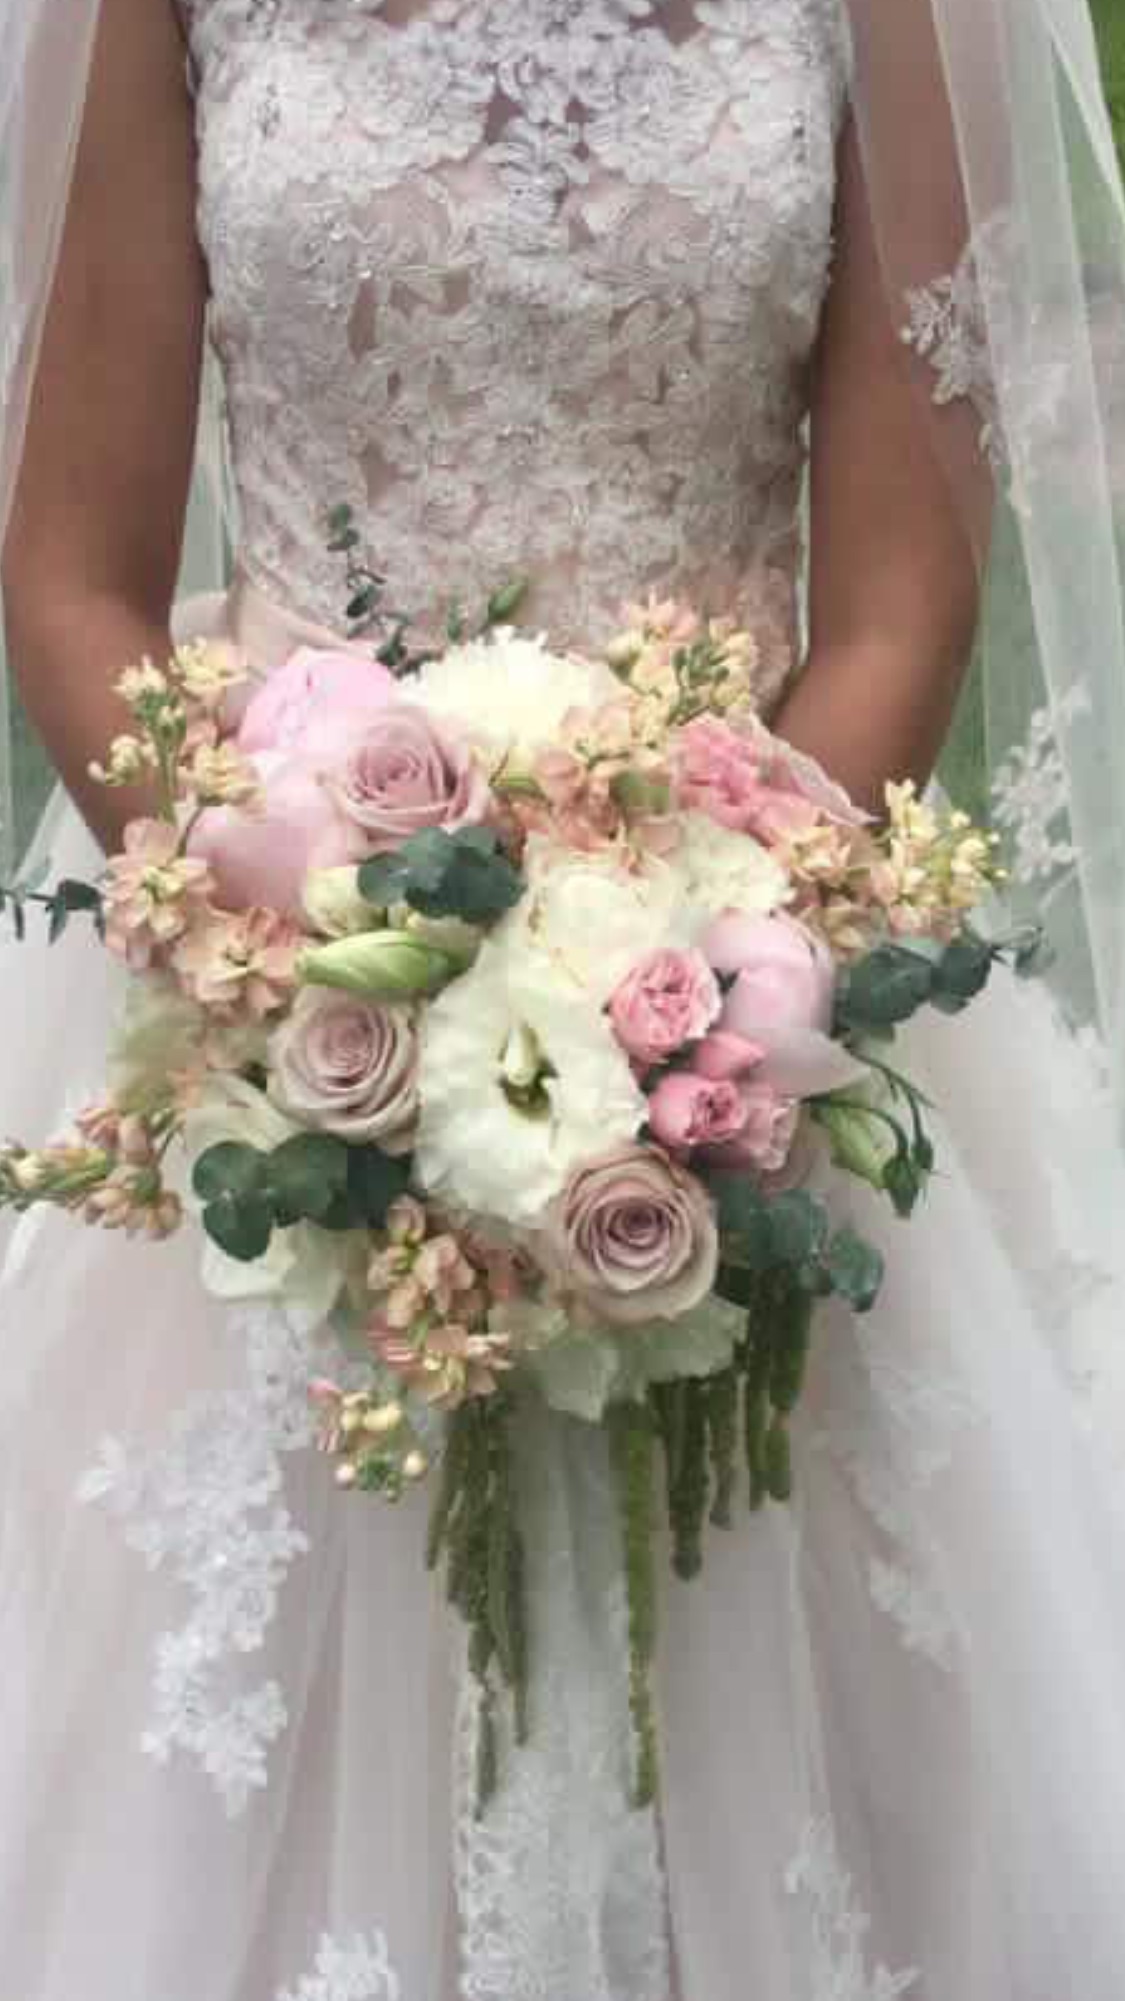 Bride with a flower bouquet